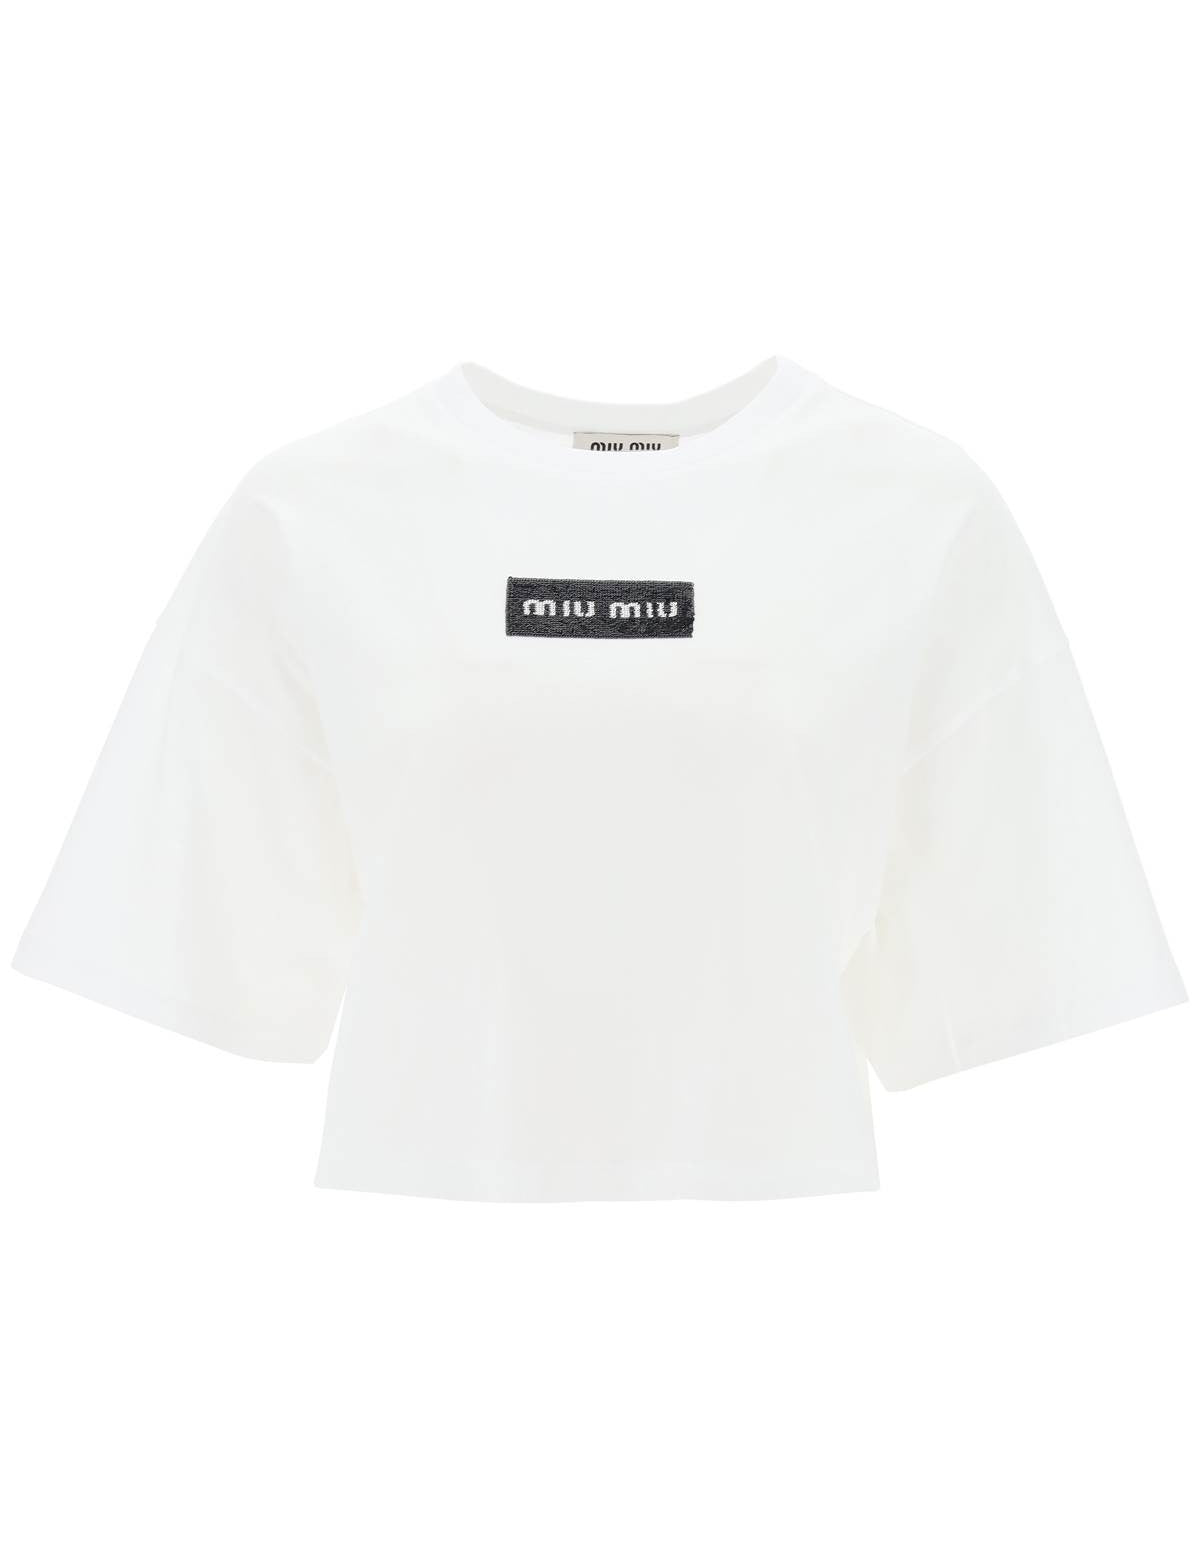 miu-miu-cropped-t-shirt-with-sequin-logo.jpg